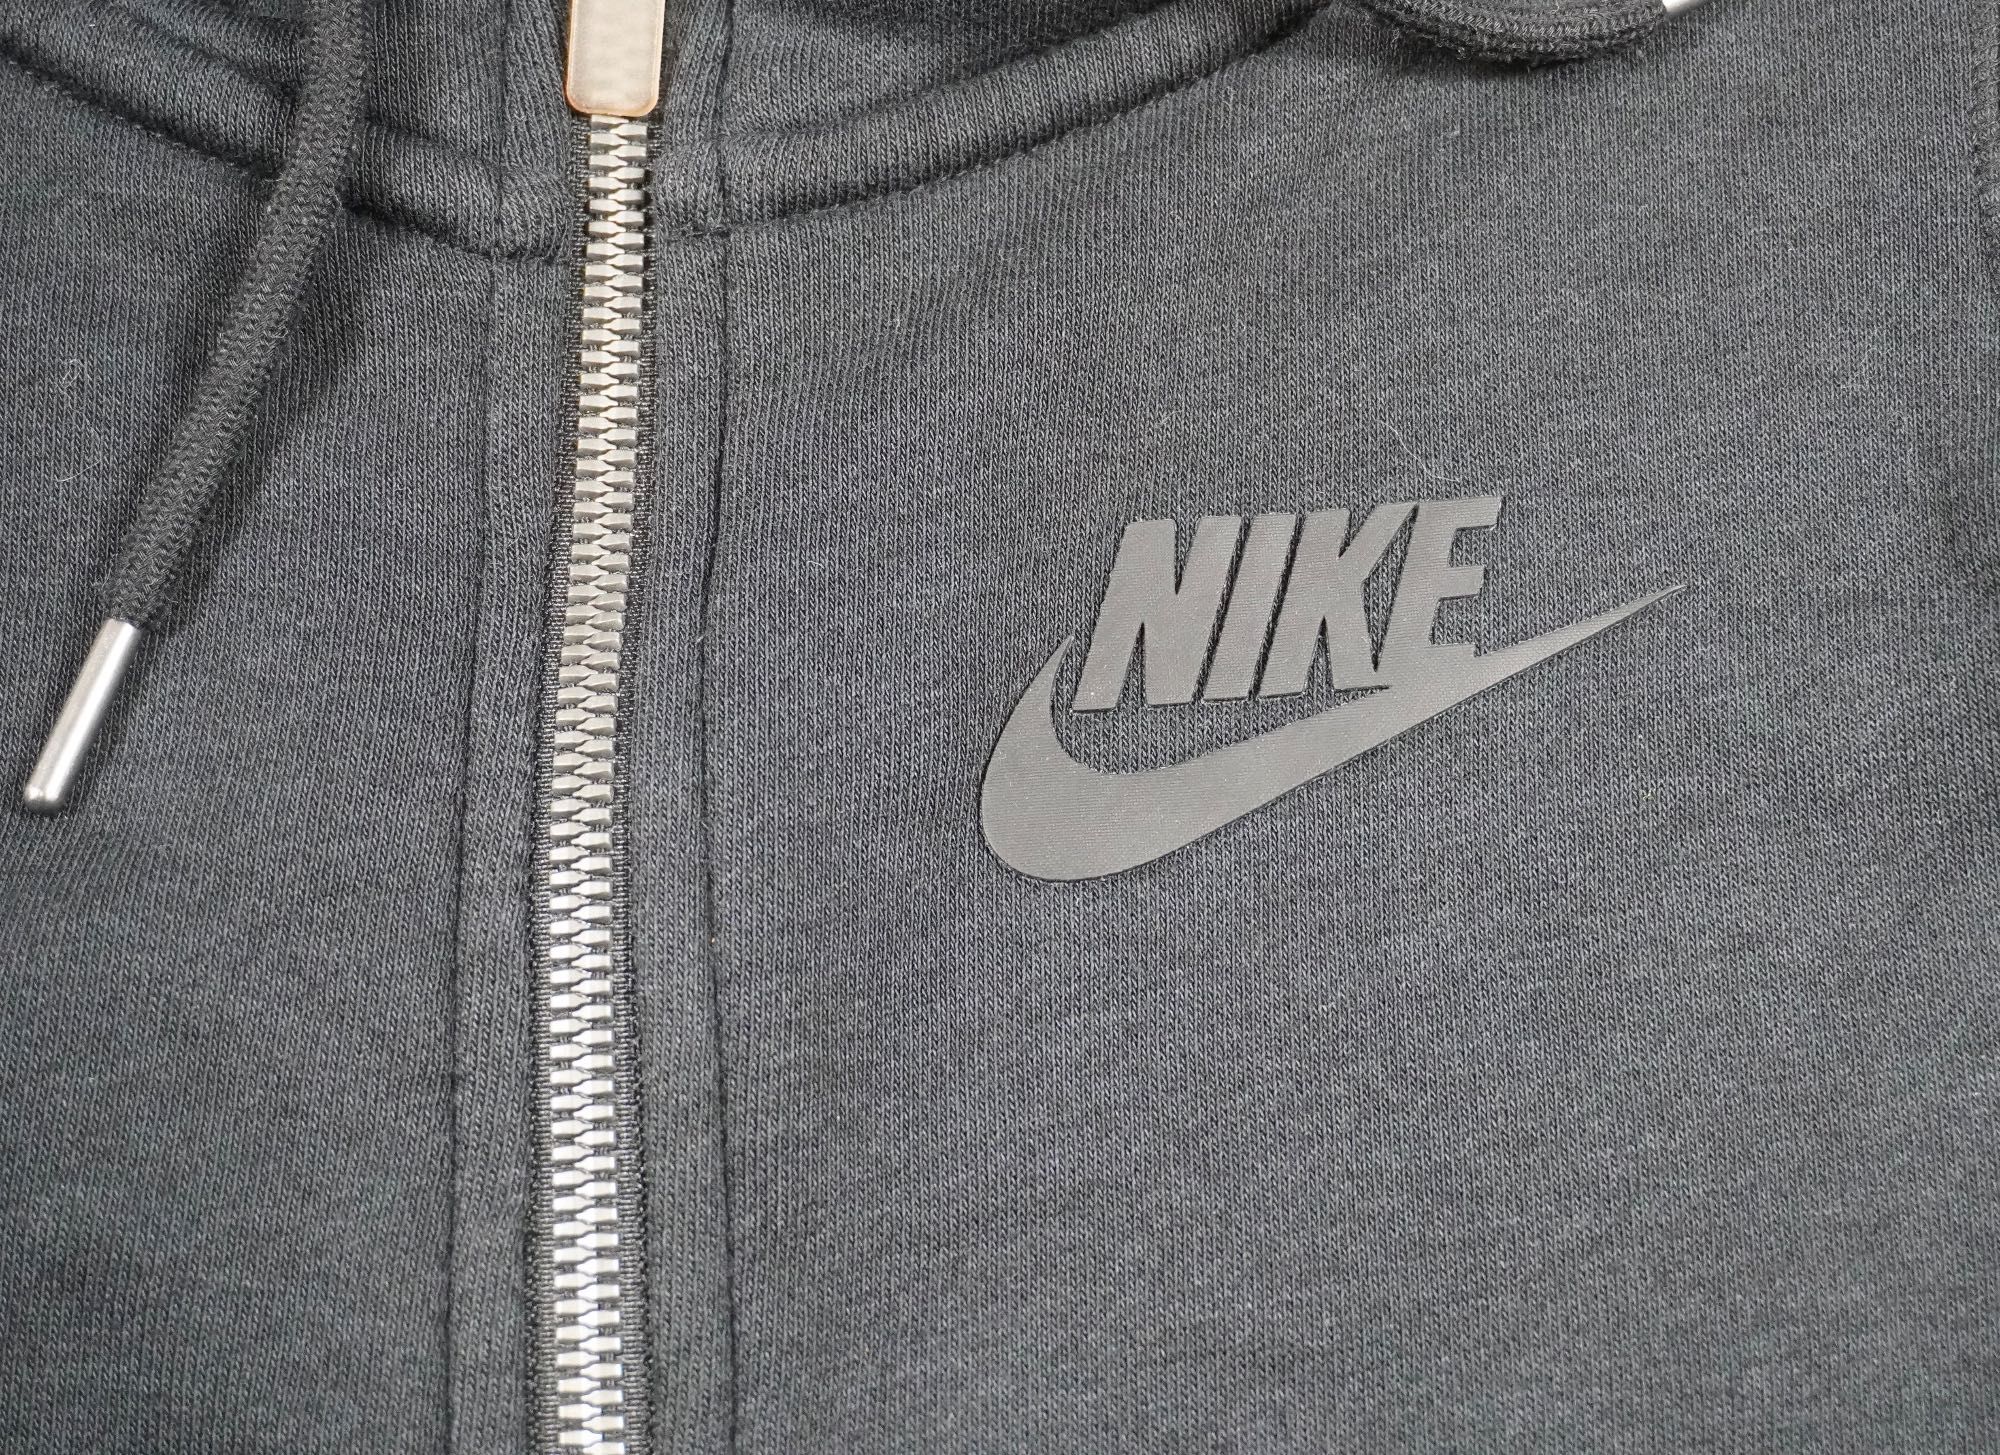 Nike bluza damska rozpinana z kapturem czarna L/XL